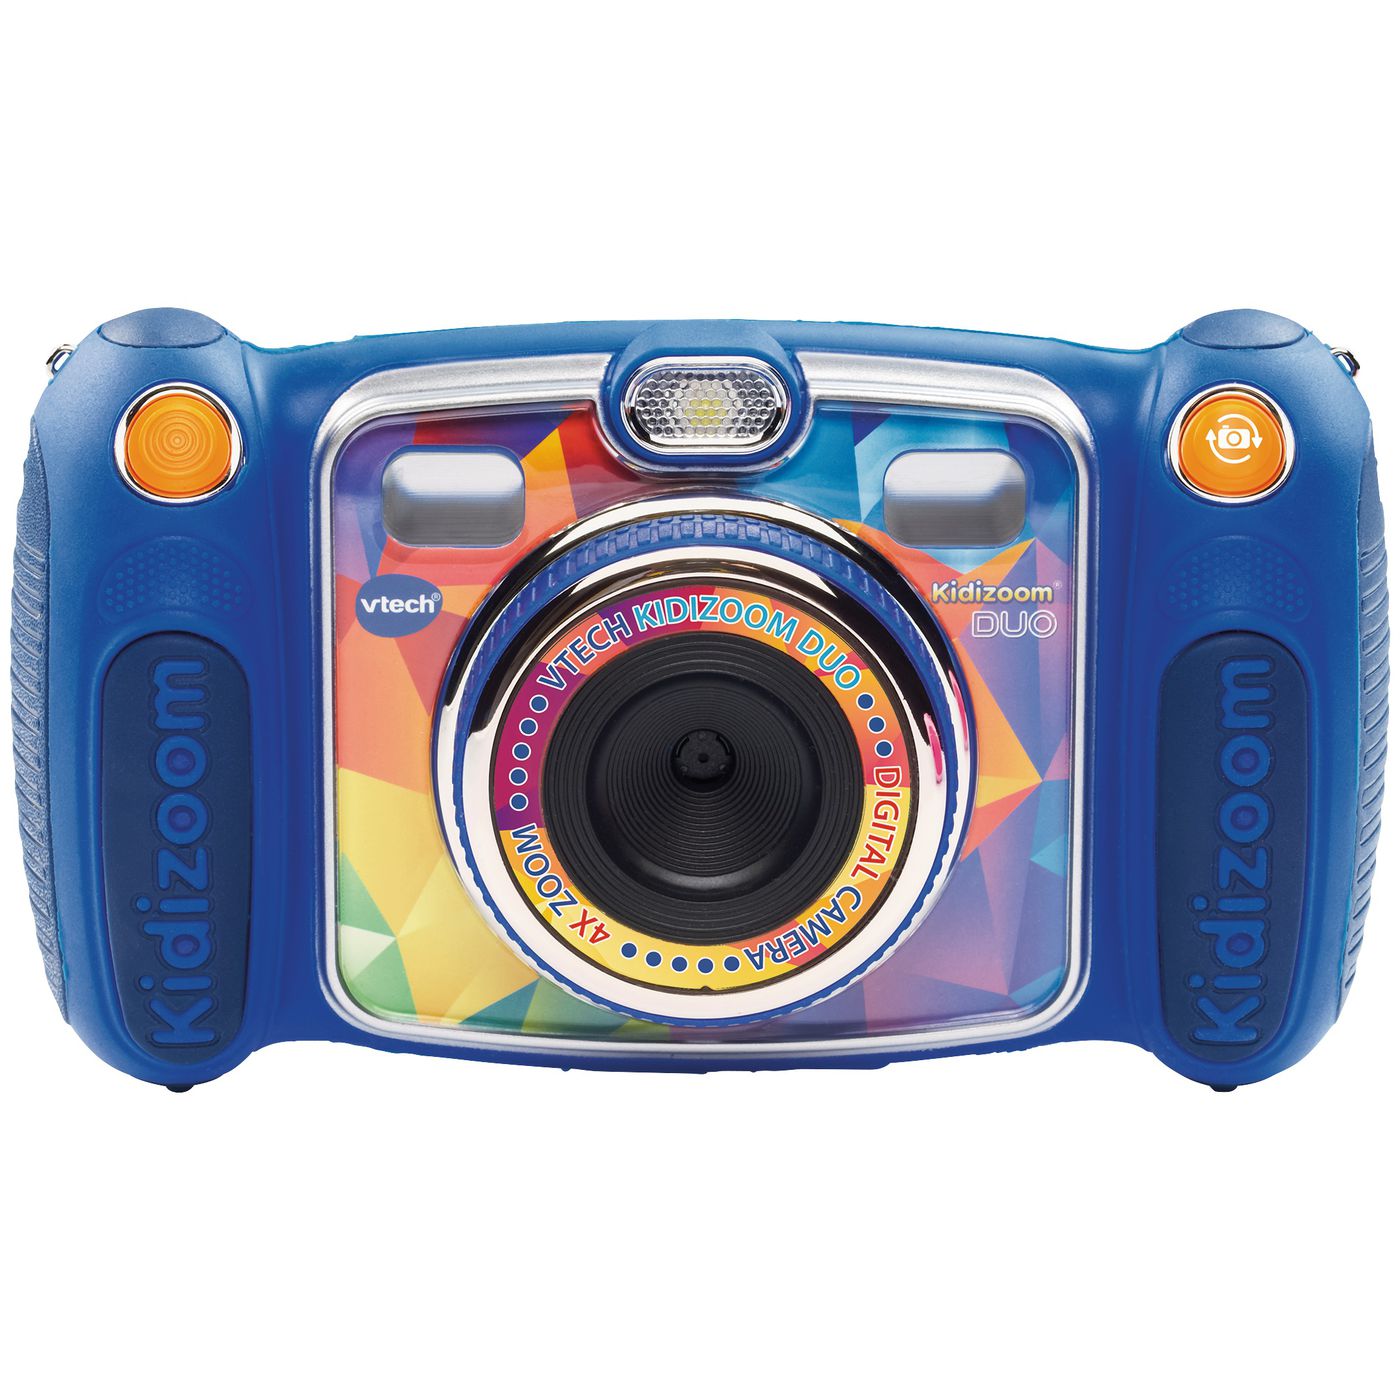 VTech 80 цифровой детский фотоаппарат, Kidizoom Duo, с 4 лет